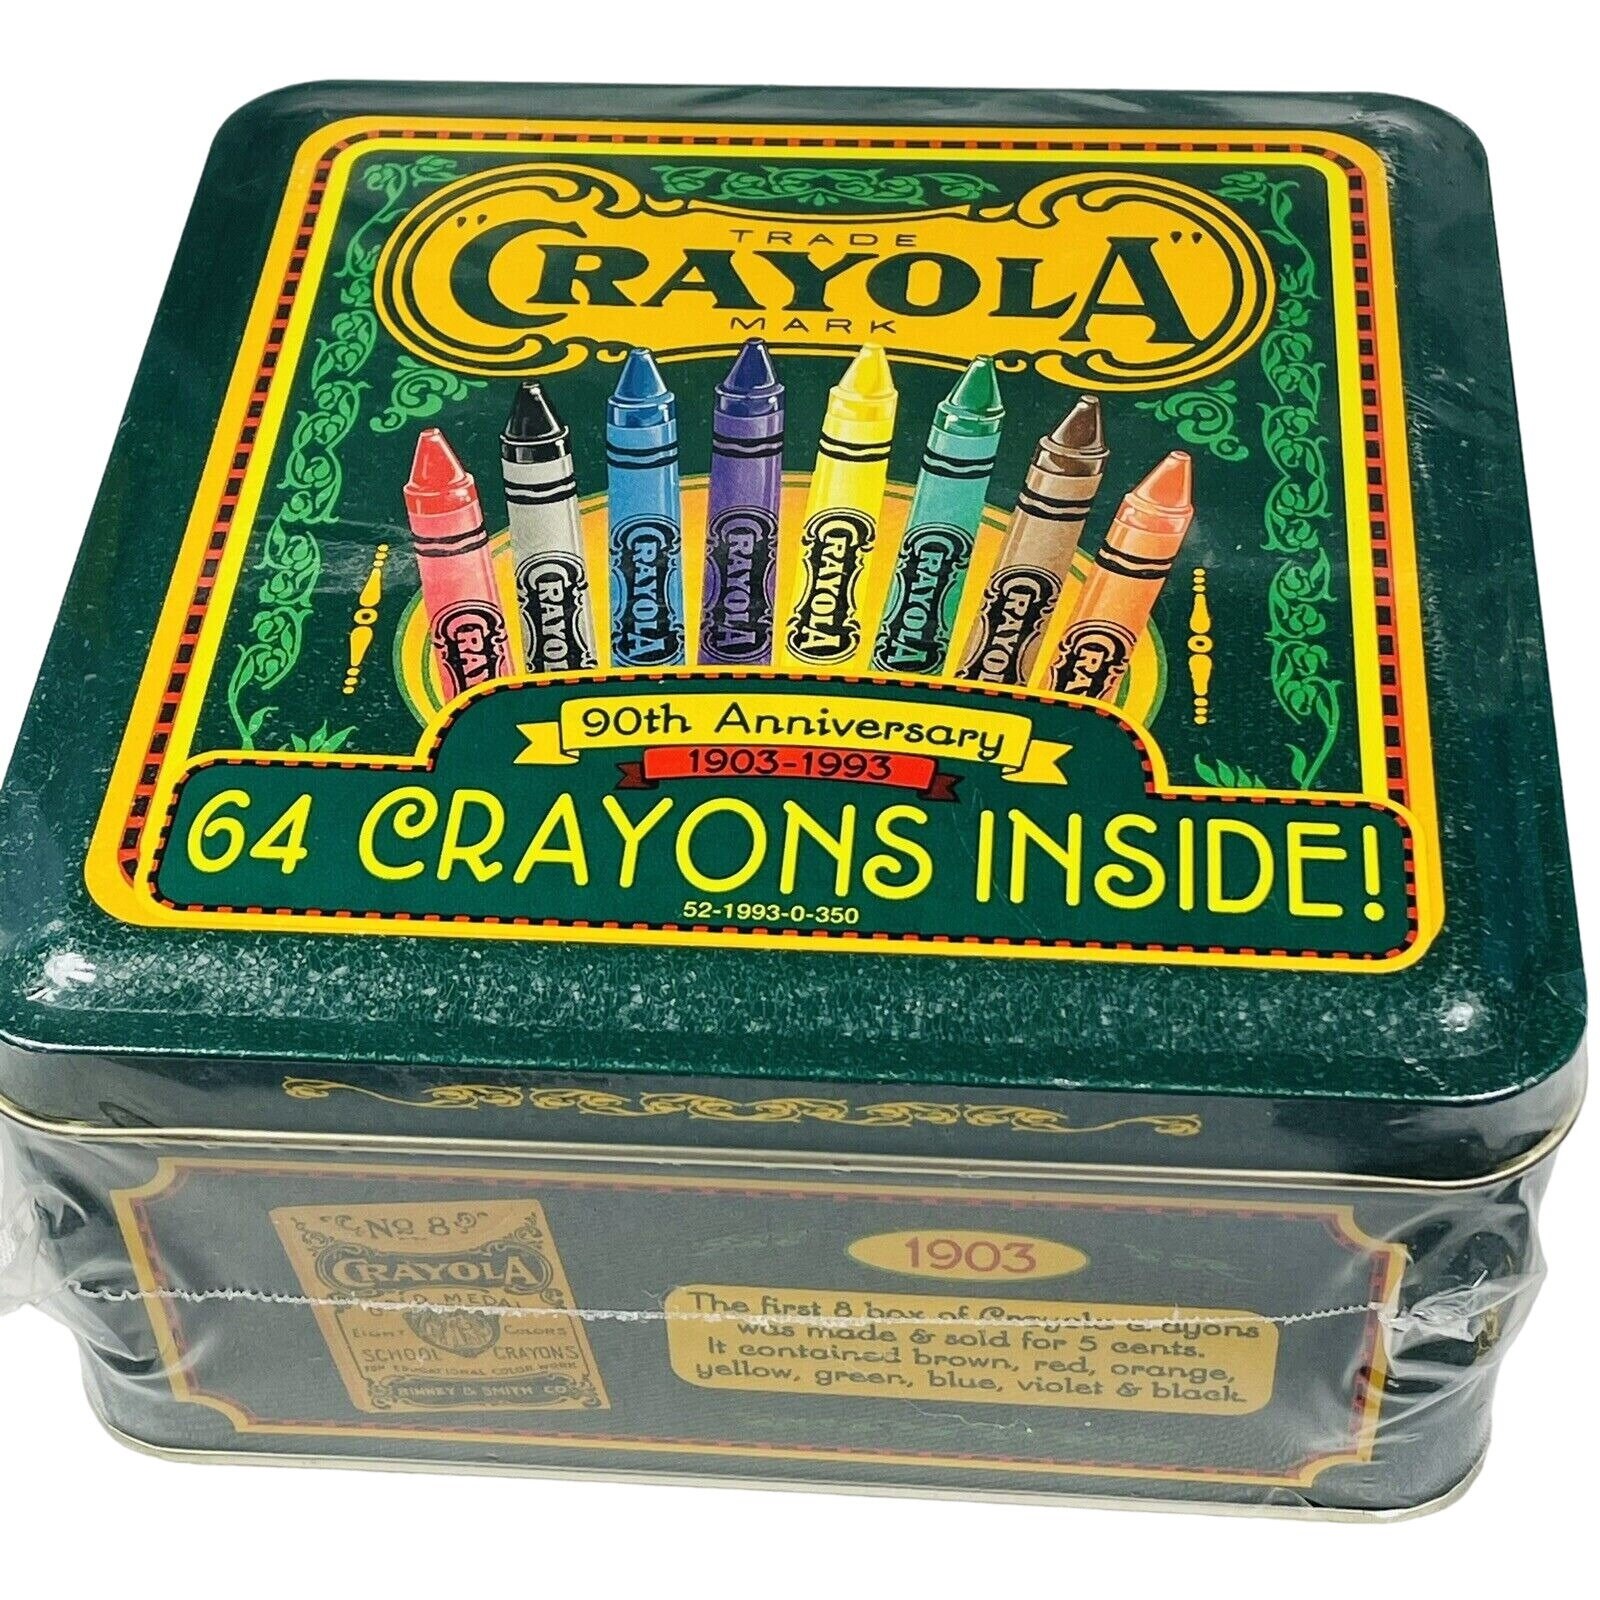 Crayola Crayon Organizer - Green Container For Crayons & Art